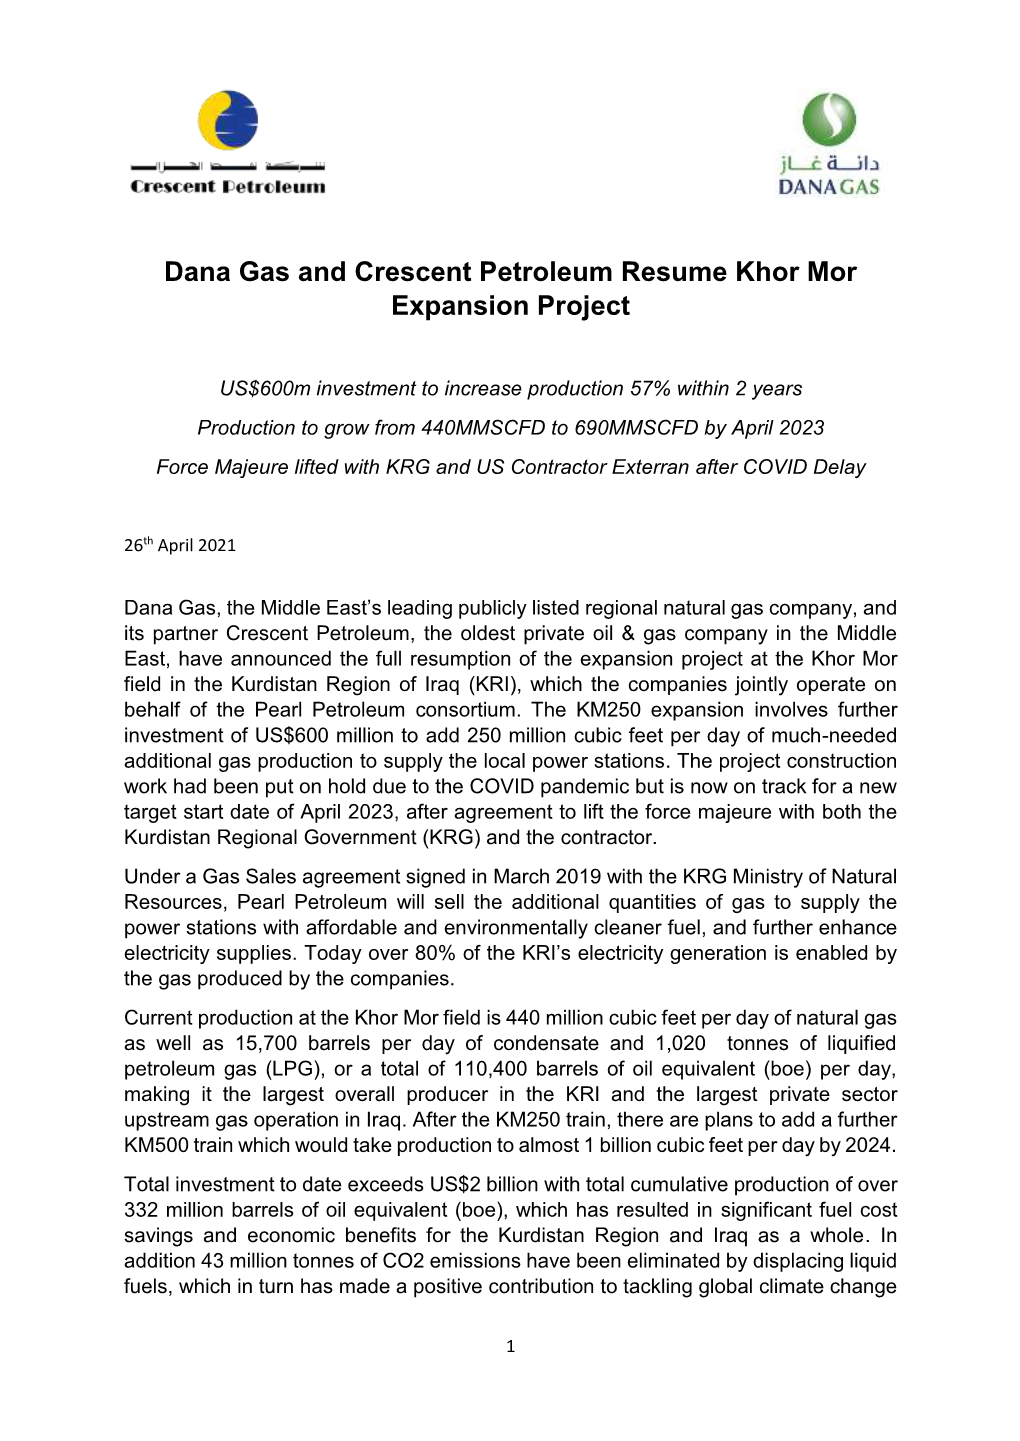 Dana Gas and Crescent Petroleum Resume Khor Mor Expansion Project